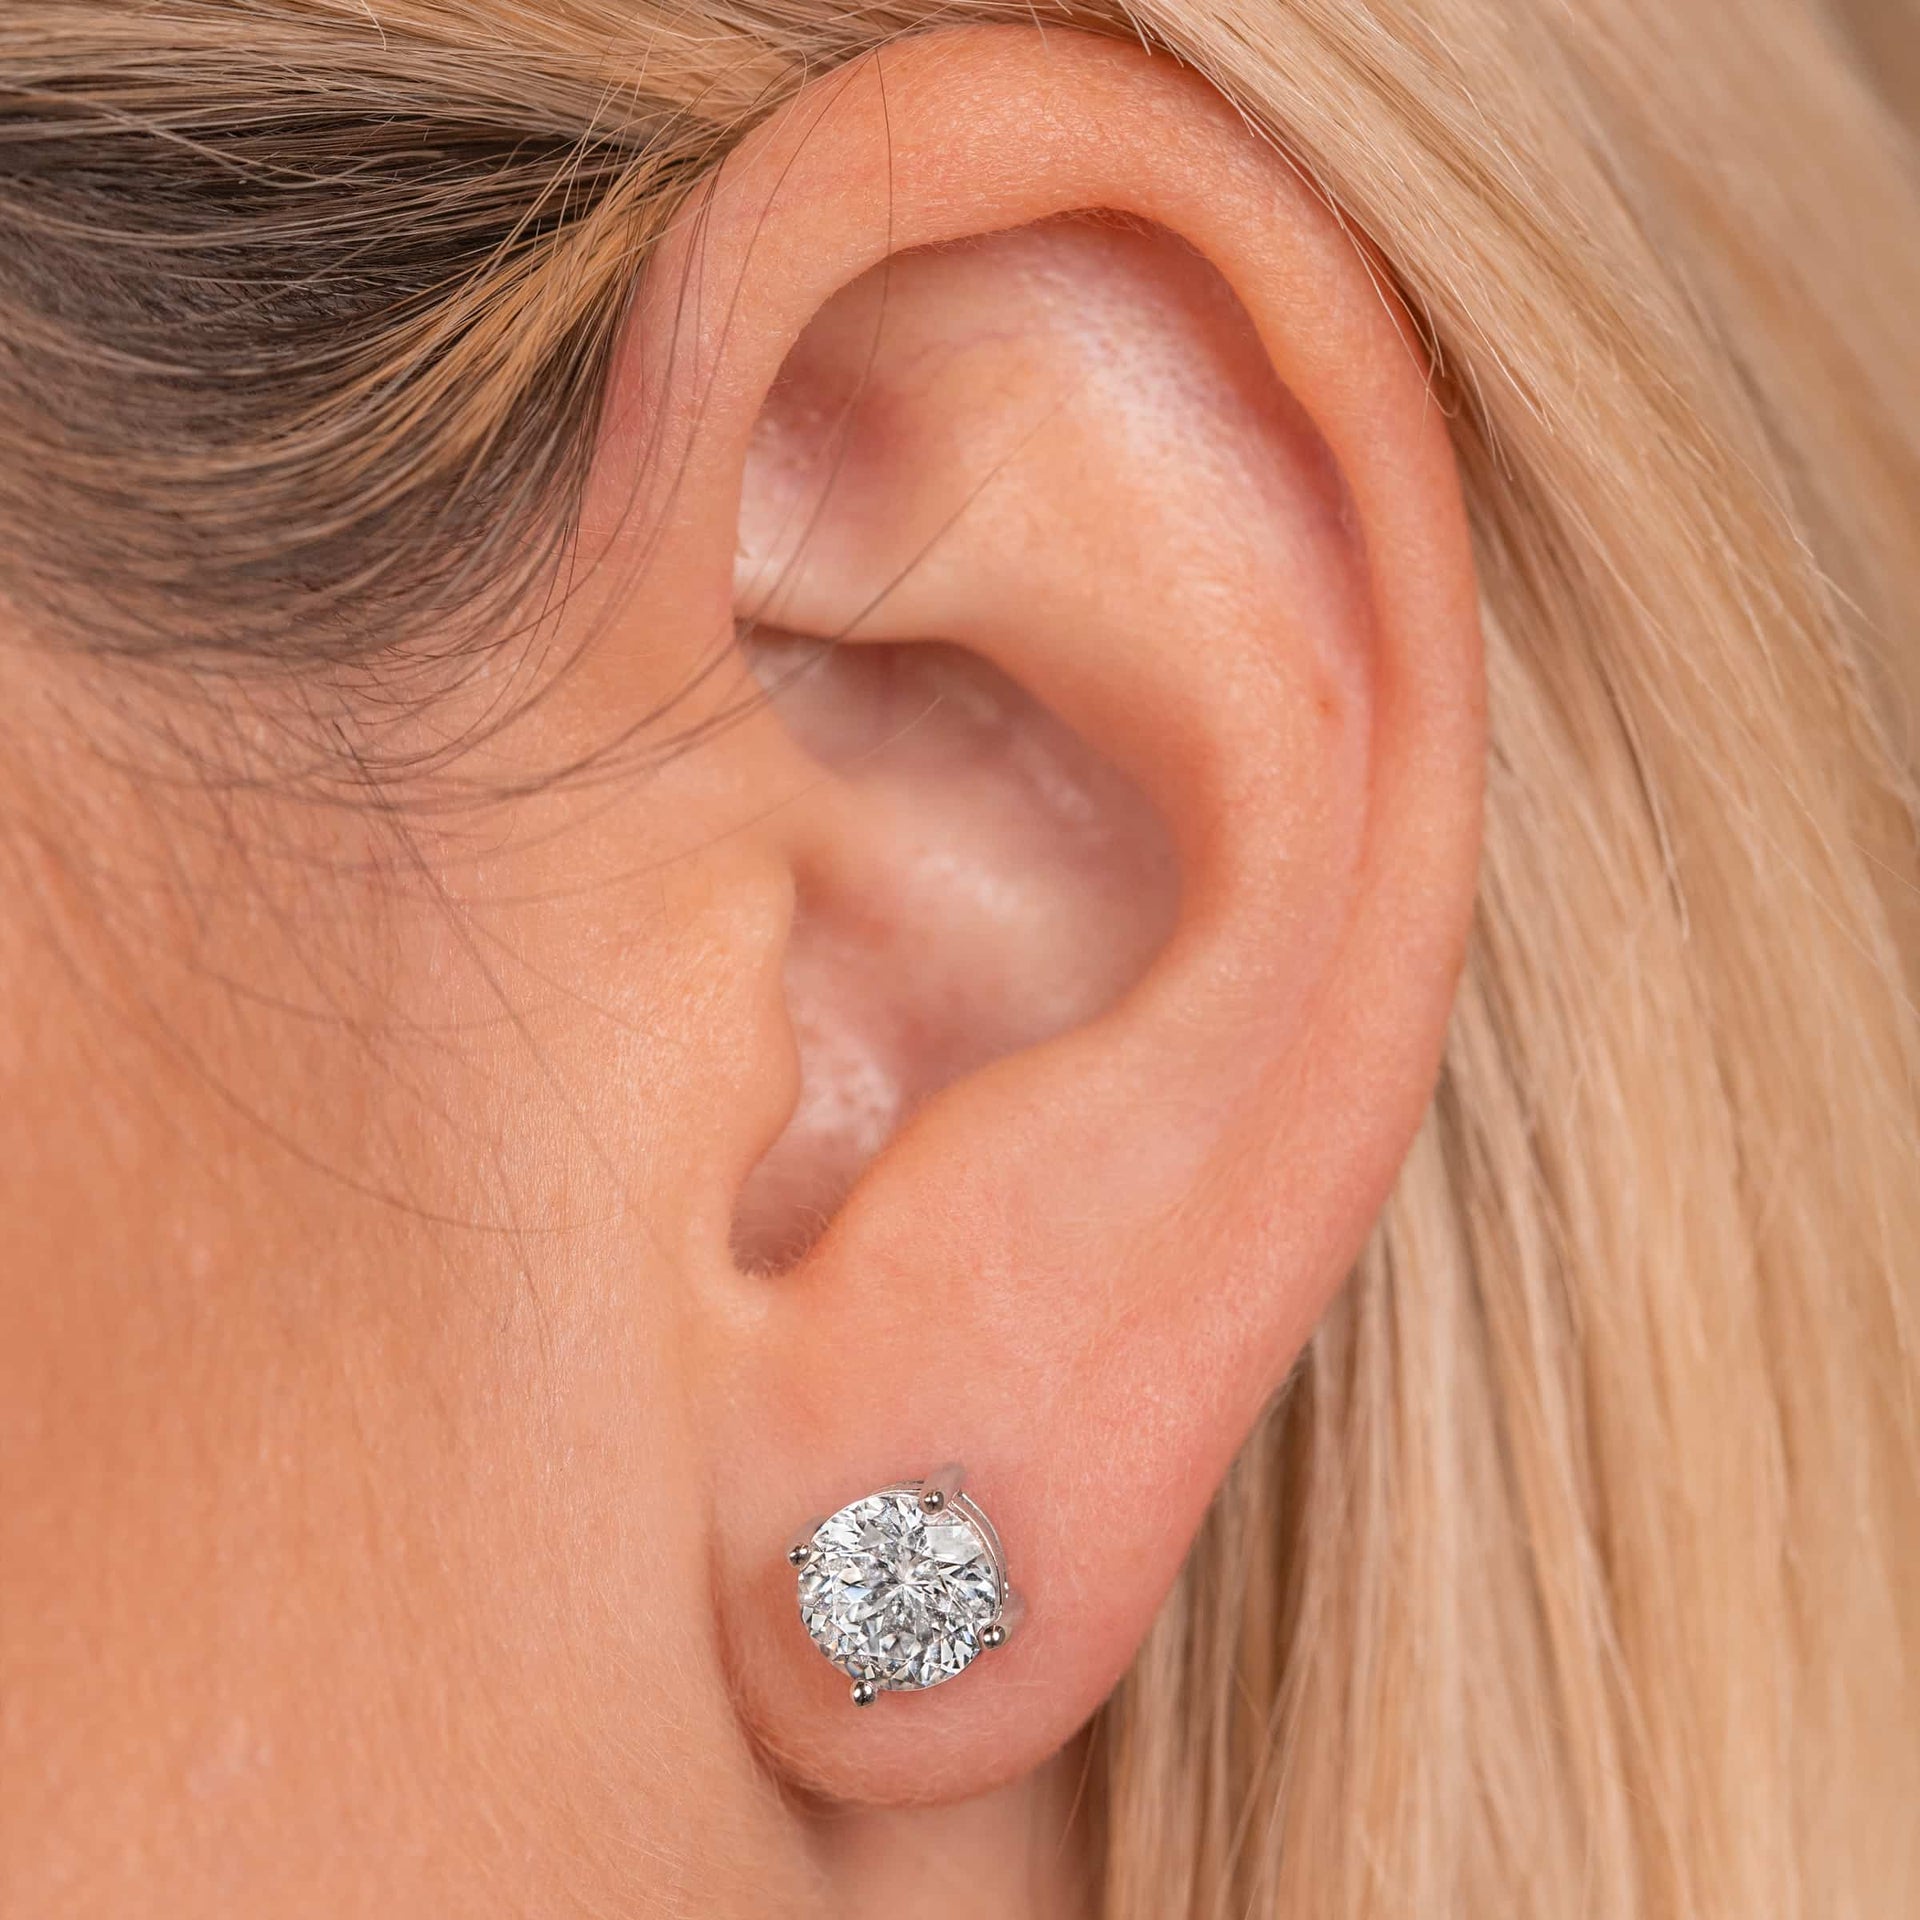 Beautiful simple stud earring